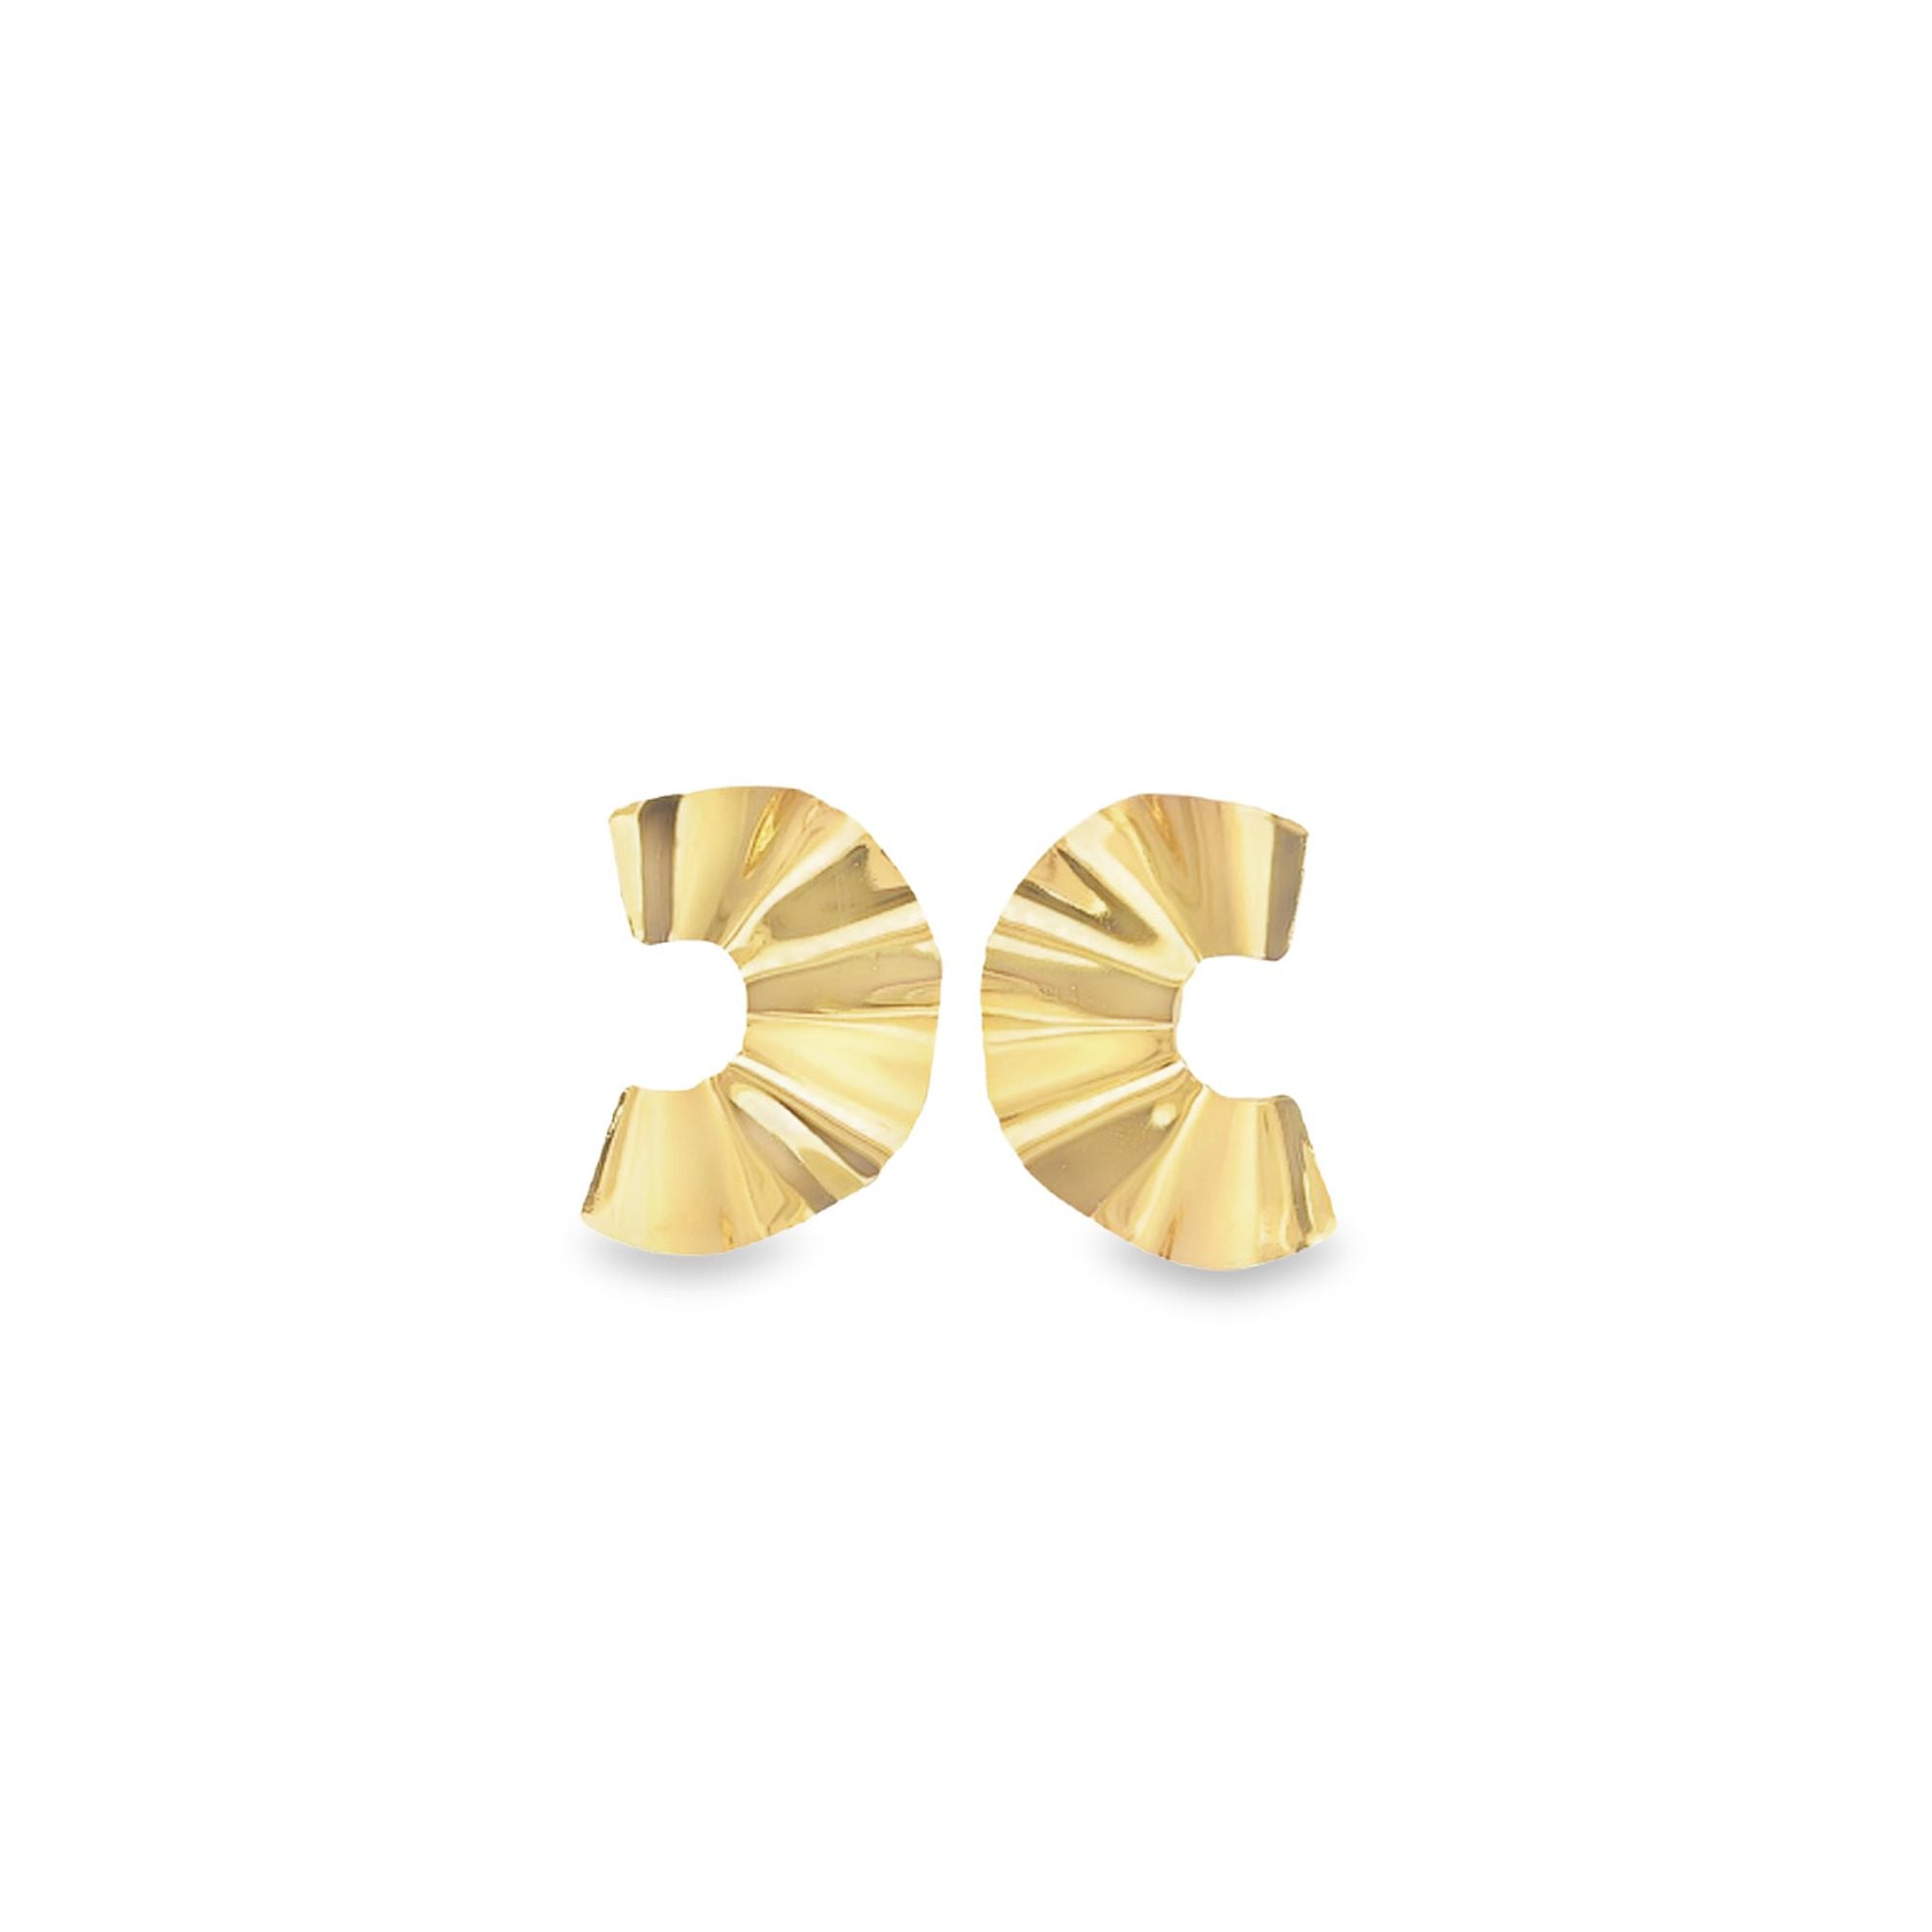 18K Gold Filled Wavy Textured Minimalist C Shaped Stud Earrings